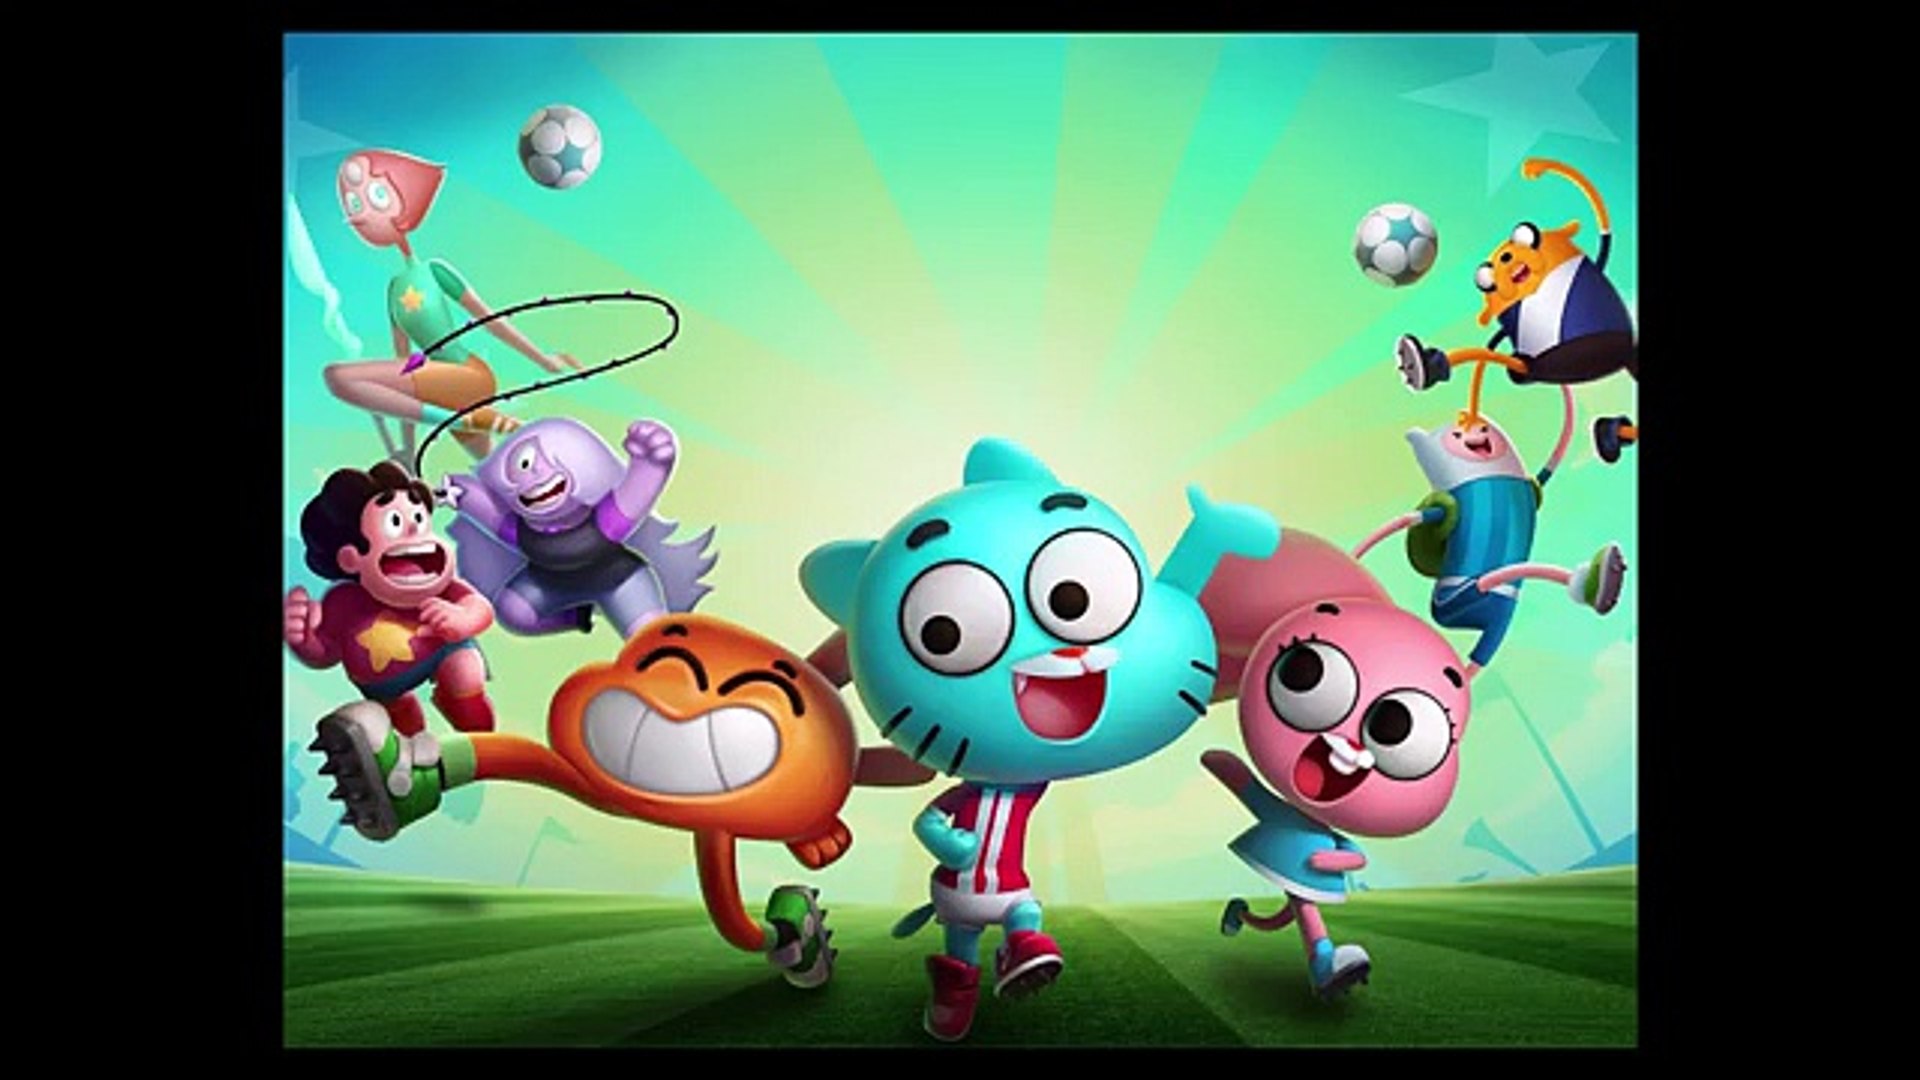 Cartoon Network Superstar Soccer: Goal (By Cartoon Network) - iOS / Android - Walktrough Video